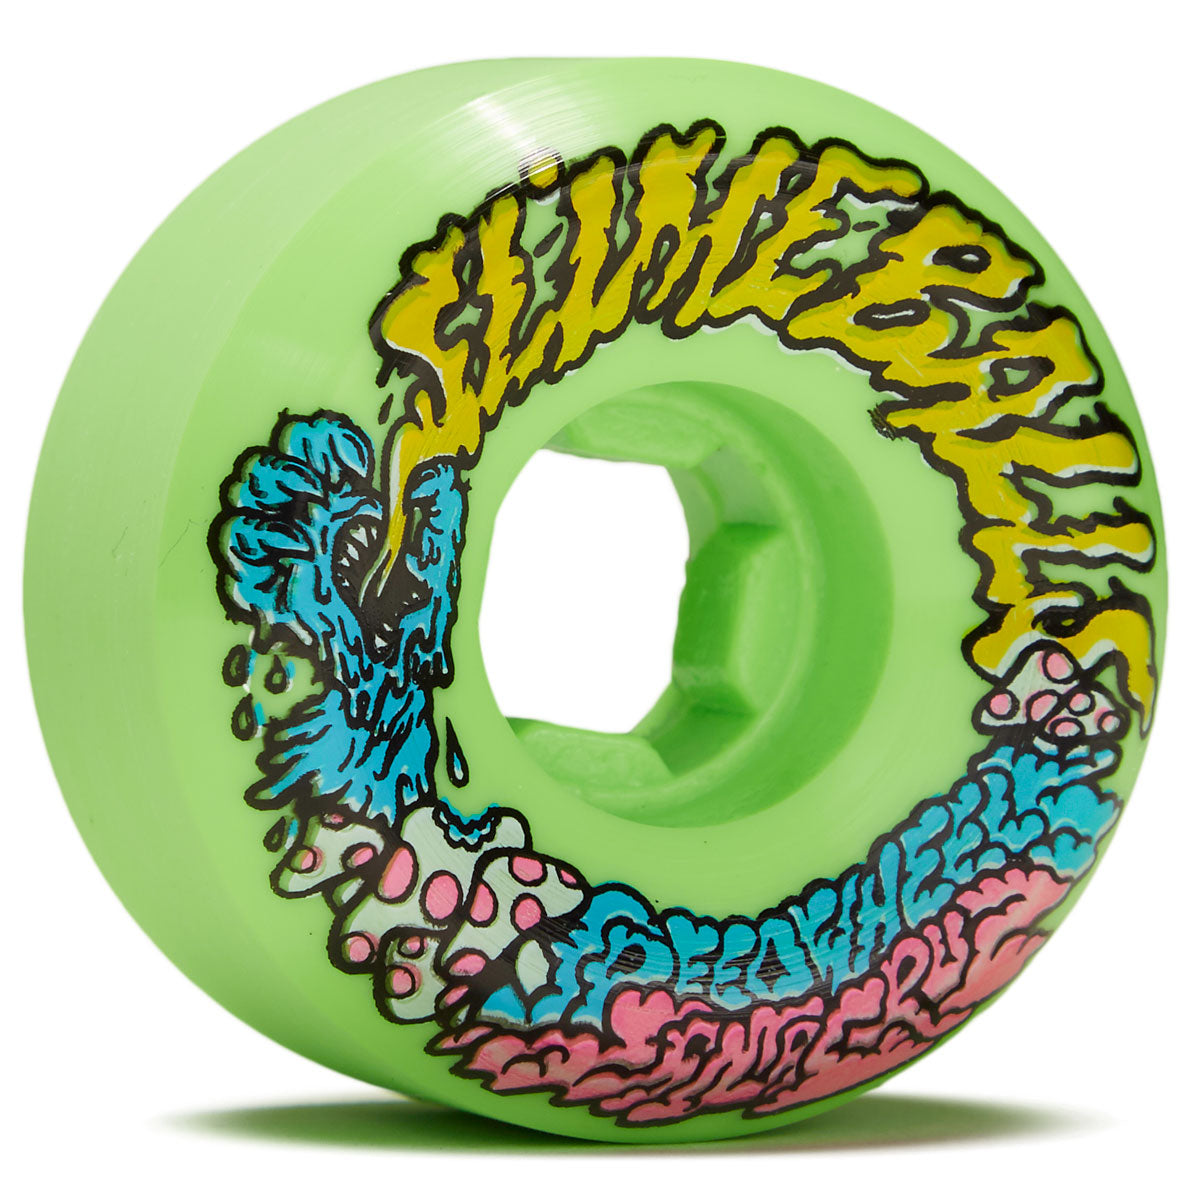 Slime Balls Vomit Mini 97a Skateboard Wheels - Green/Green - 53mm